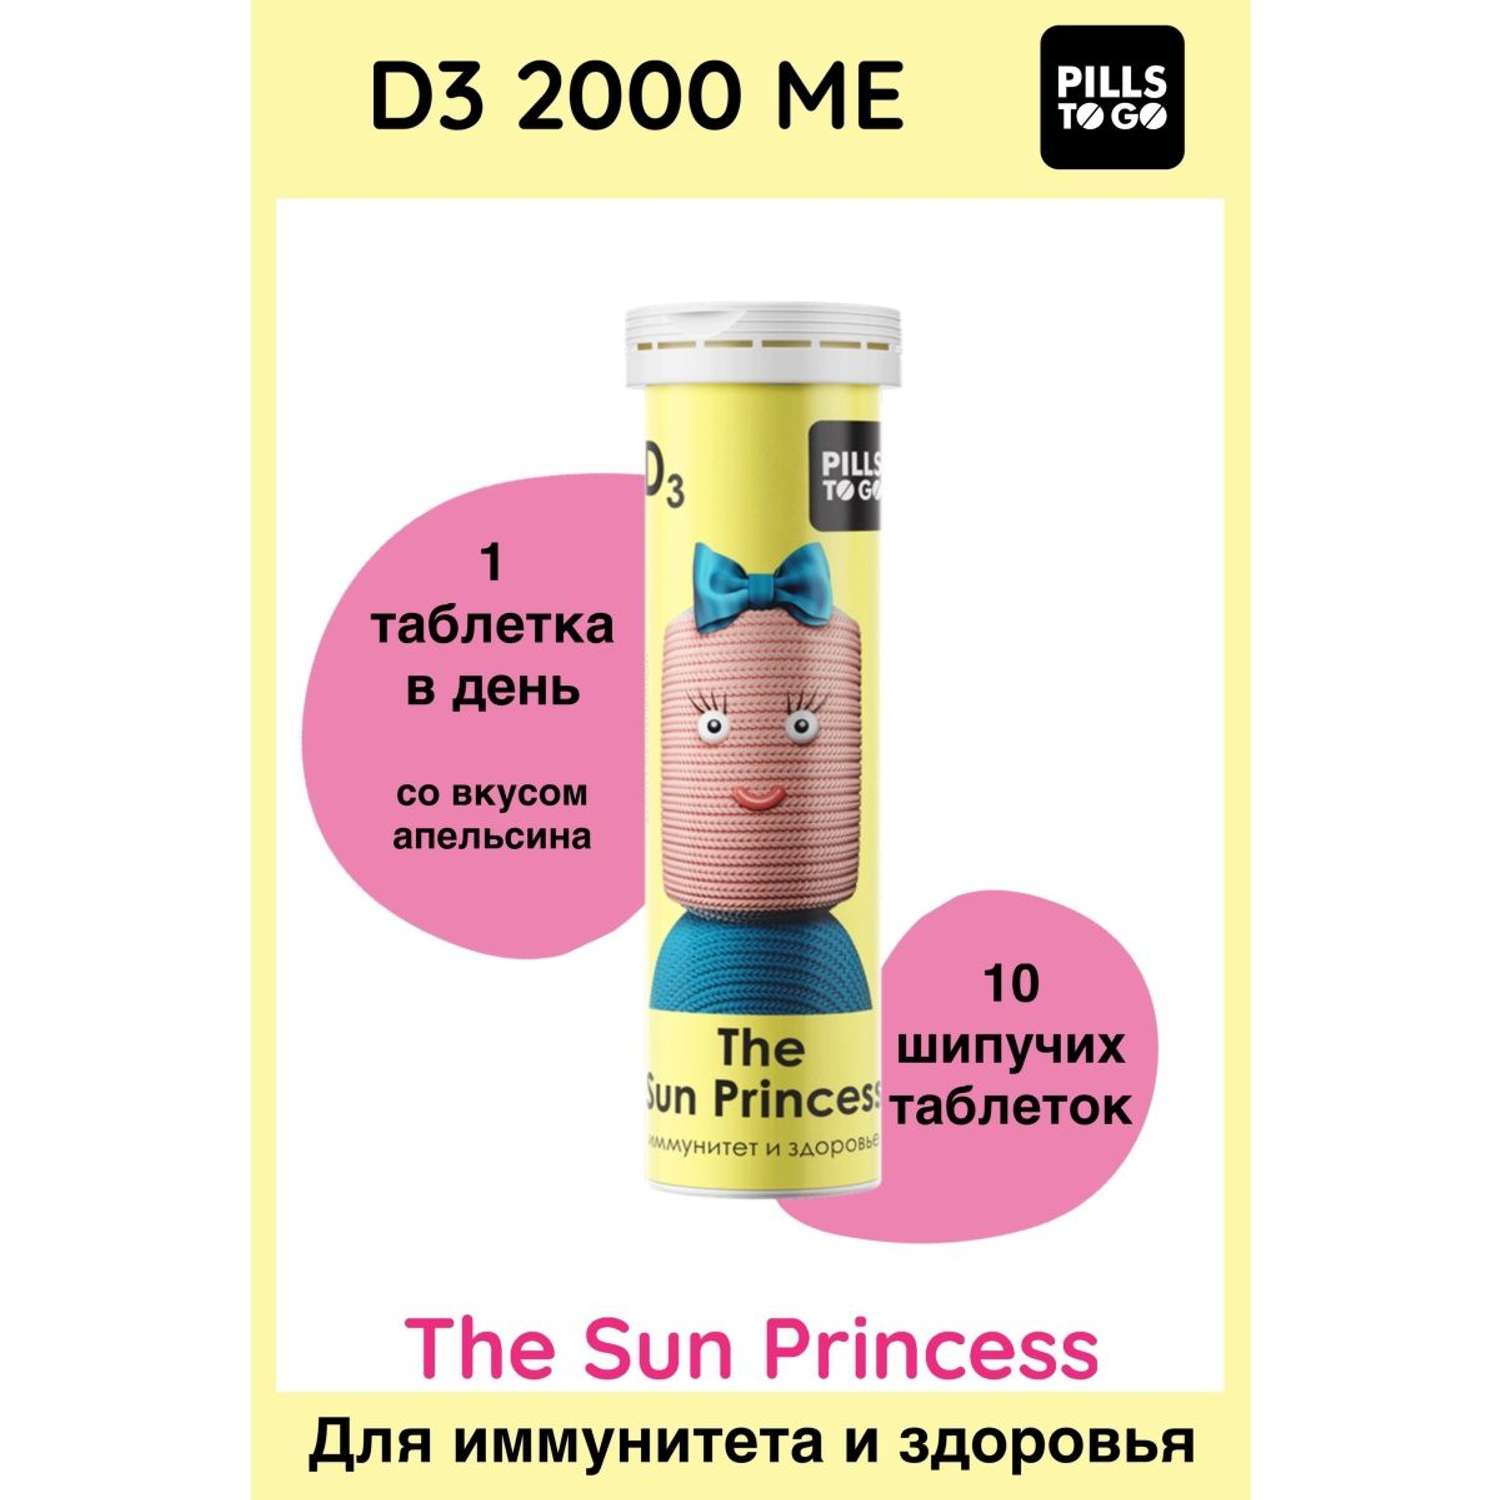 Комплекс PILLS TO GO для иммунитета и здоровья The Sun Princess Витамин D3 2000 МЕ 10 шипучих таблеток - фото 1